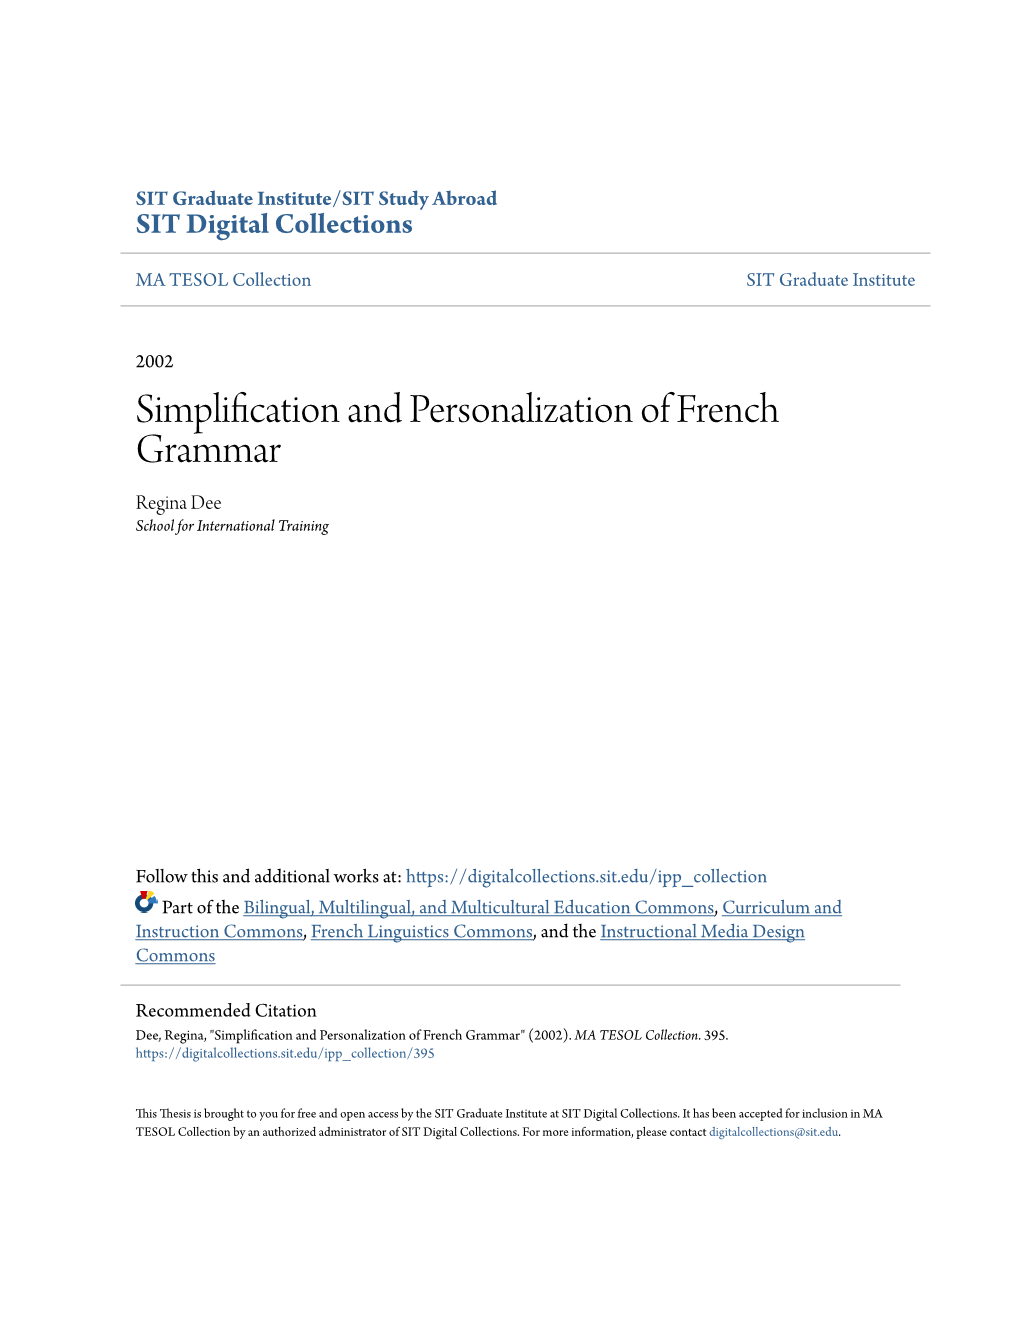 Simplification and Personalization of French Grammar Regina Dee School for International Training